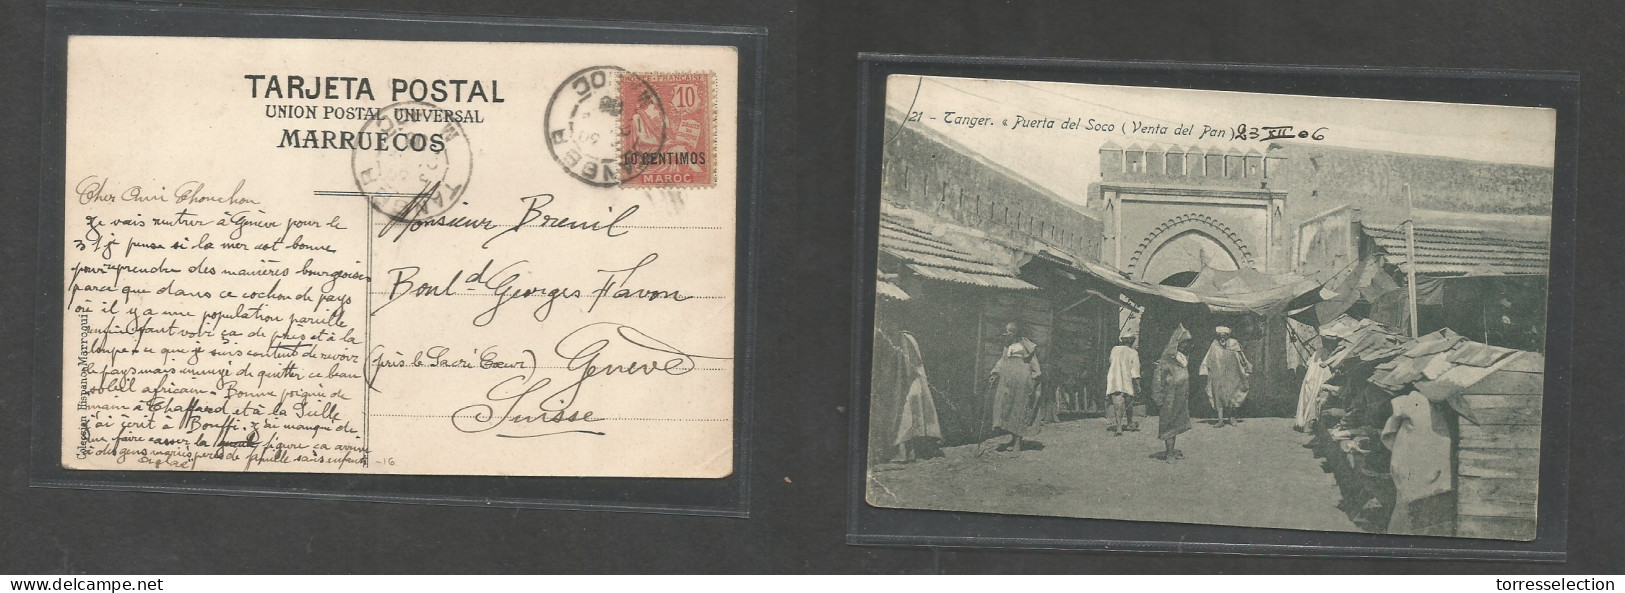 MARRUECOS - French. 1906. Tanger - Switzerland, Geneva. Fkd Ppc. Spanish Currency 10c Ovptd Red, Tied Cds. Fine. SALE. - Maroc (1956-...)